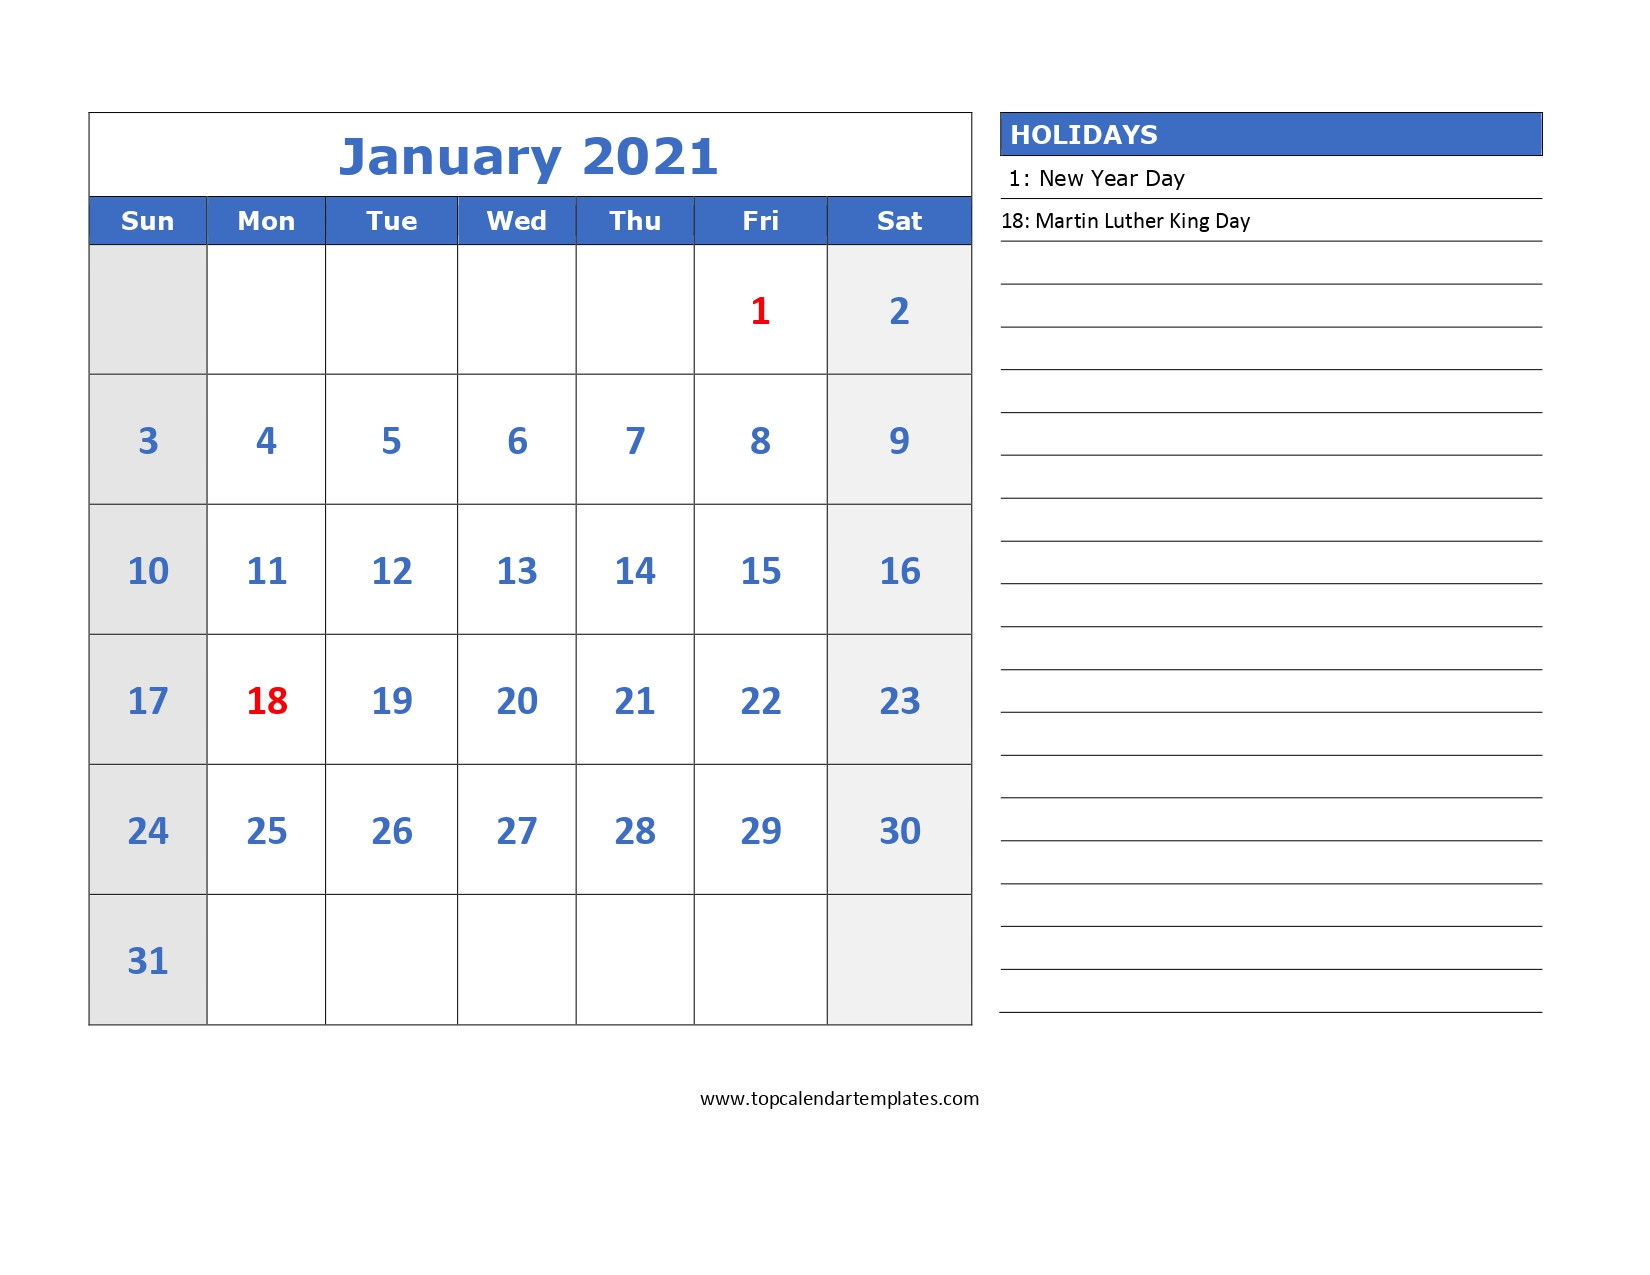 Free Blank Calendar 2021 Printable | Free Letter Templates-2021 Blank Vacation Calendar